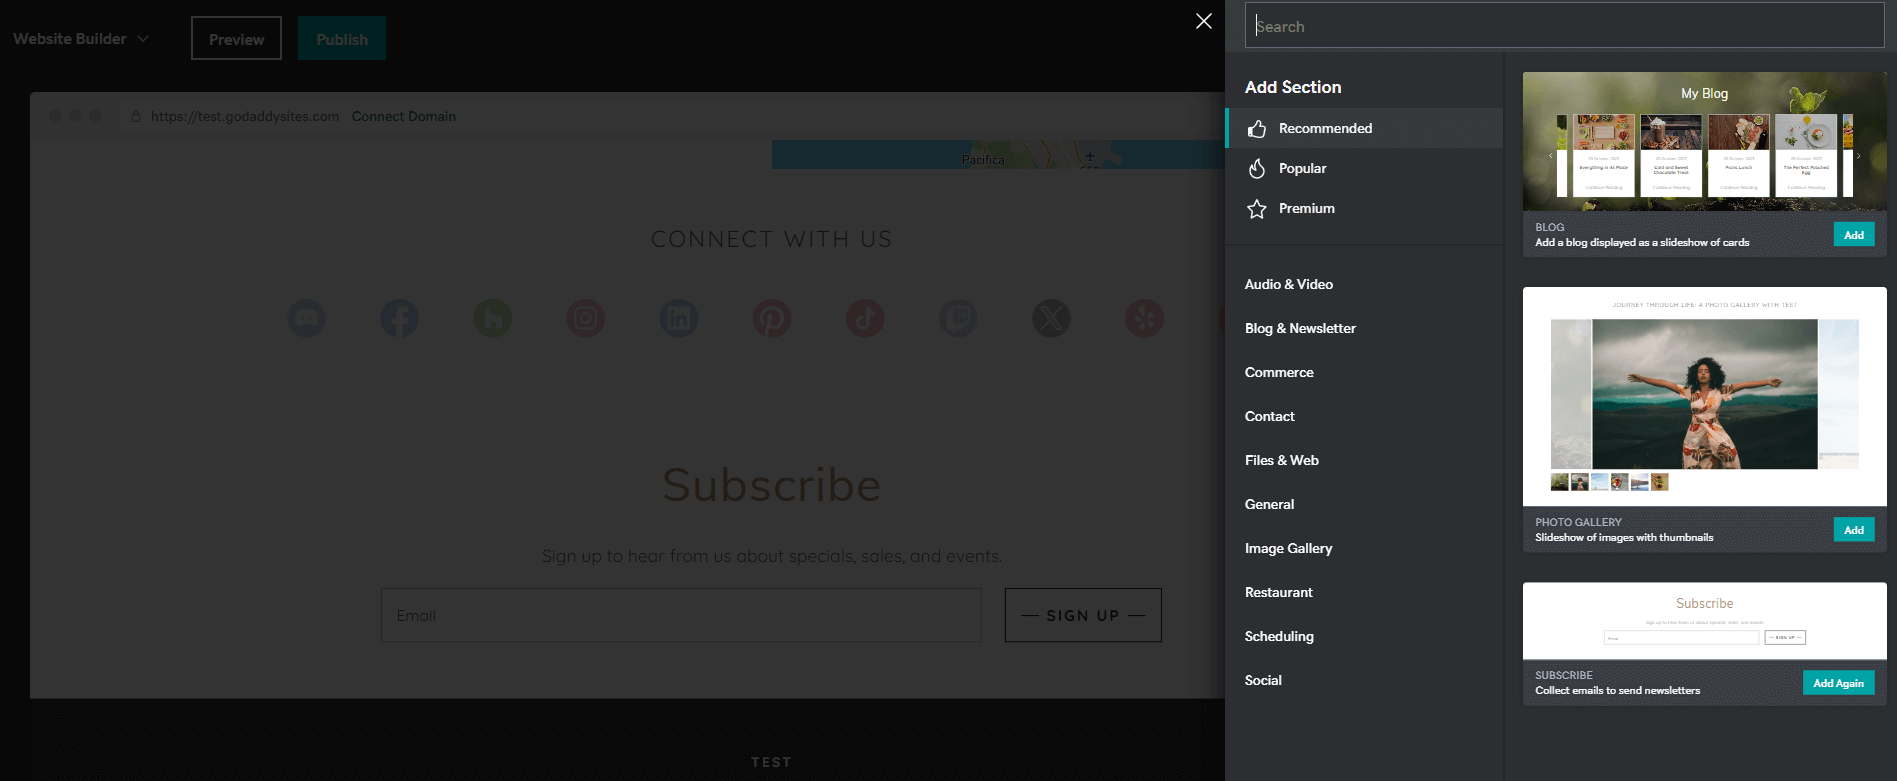 GoDaddy website builder "Add Section" menu.